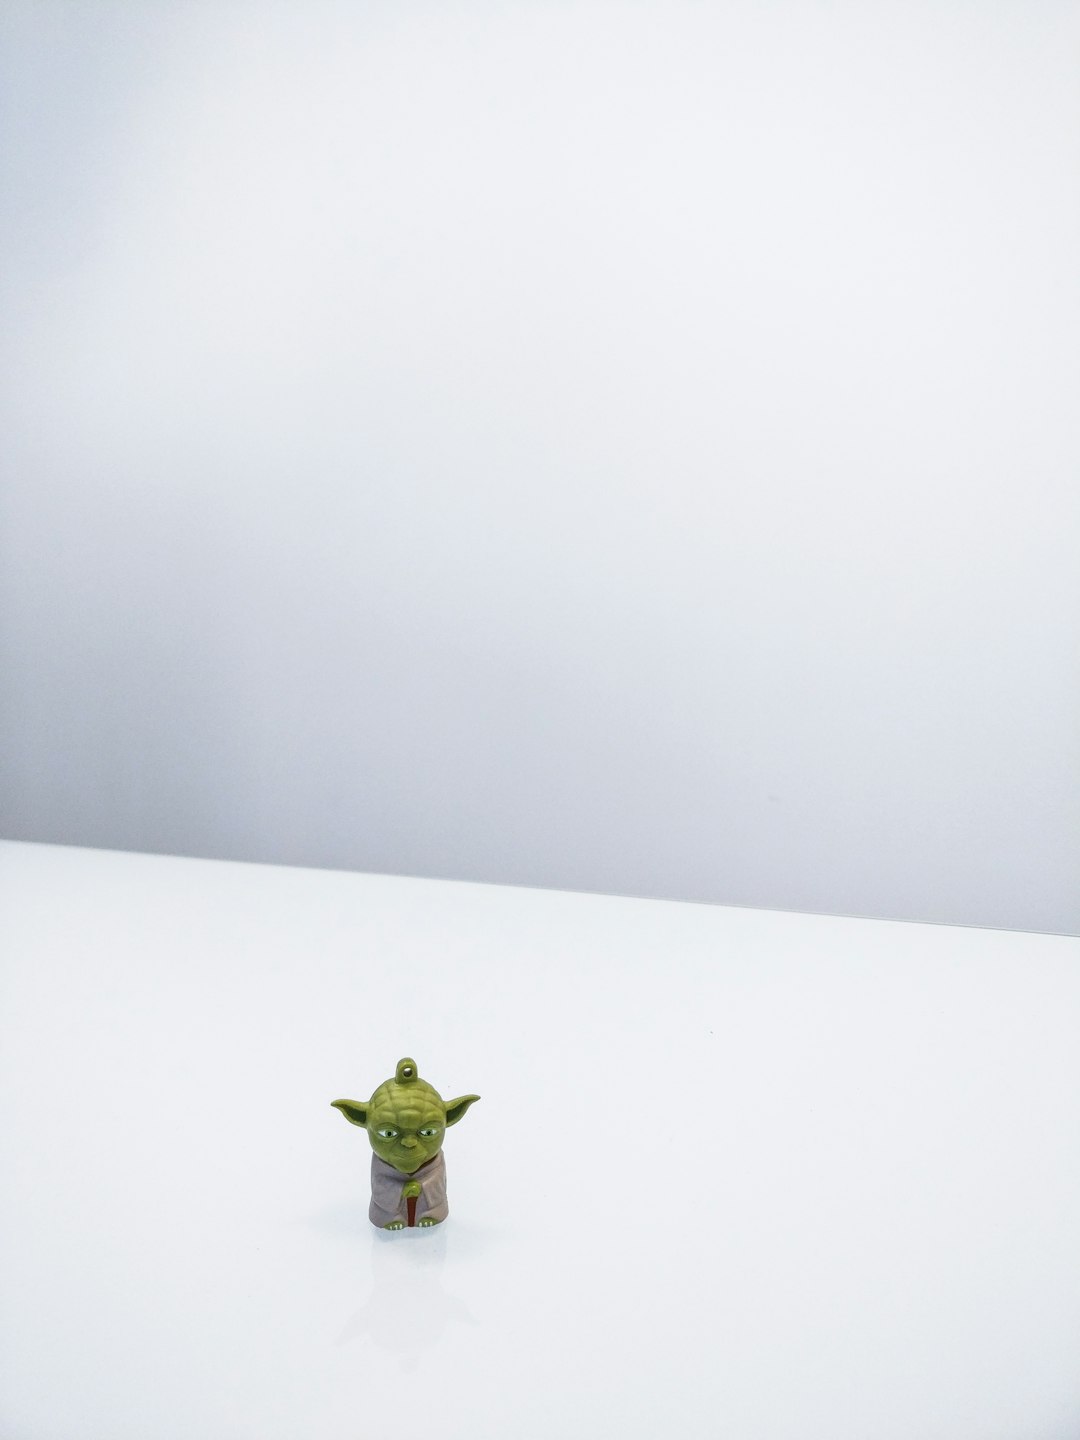 Star Wars Master Yoda minifigure on white surface